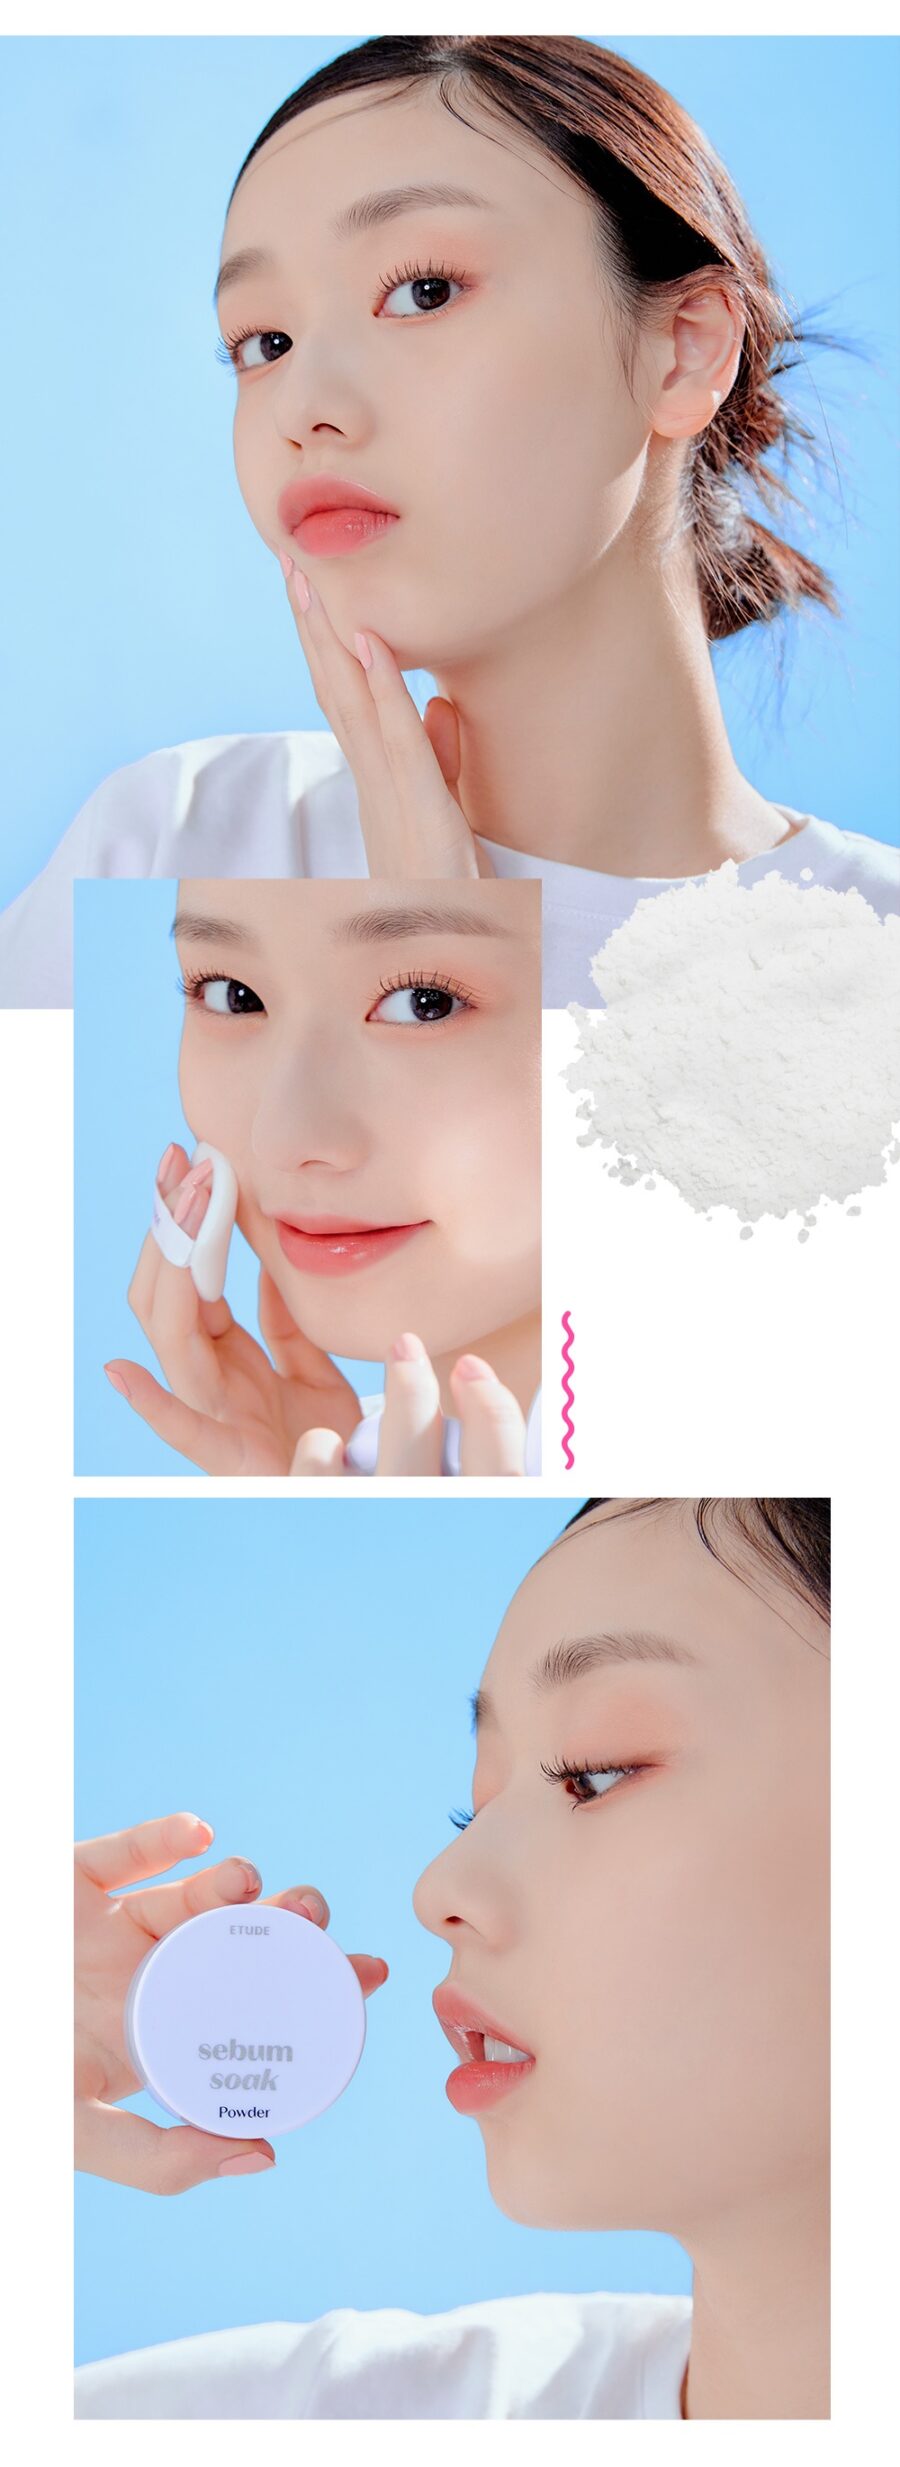 Etude House Sebum Soak Powder korean skincare product online shop malaysia china india2